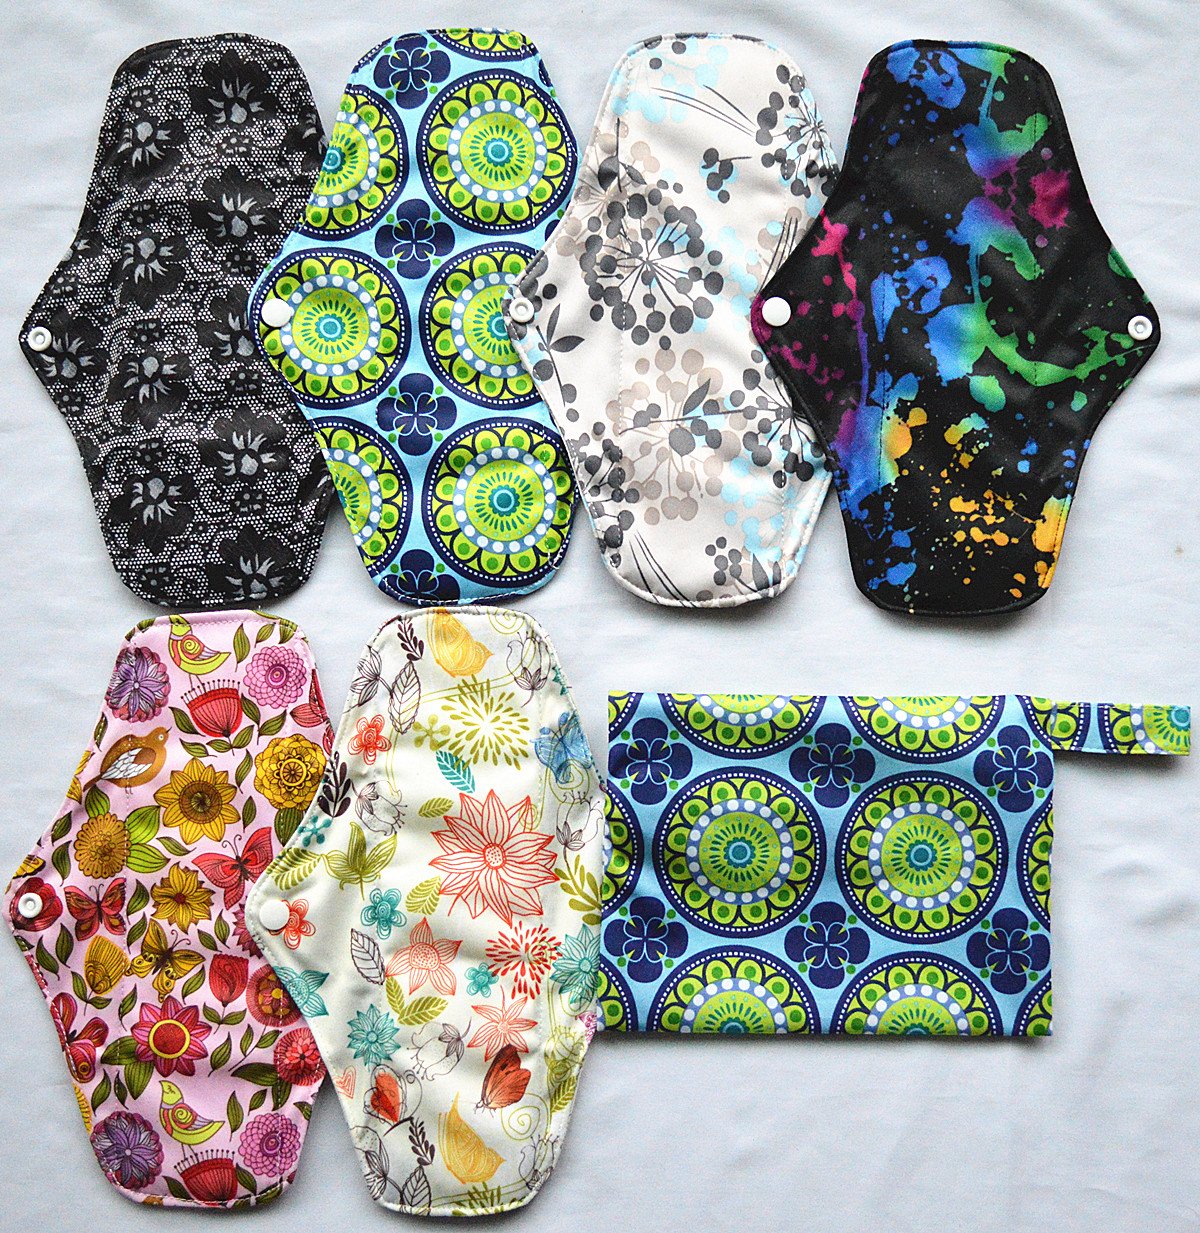 7pcs Set 1pc Mini Wet Bag +6pcs 10 Inch Regular Charcoal Bamboo Mama Cloth/Menstrual Pads/Reusable Sanitary Pads(Peacock)